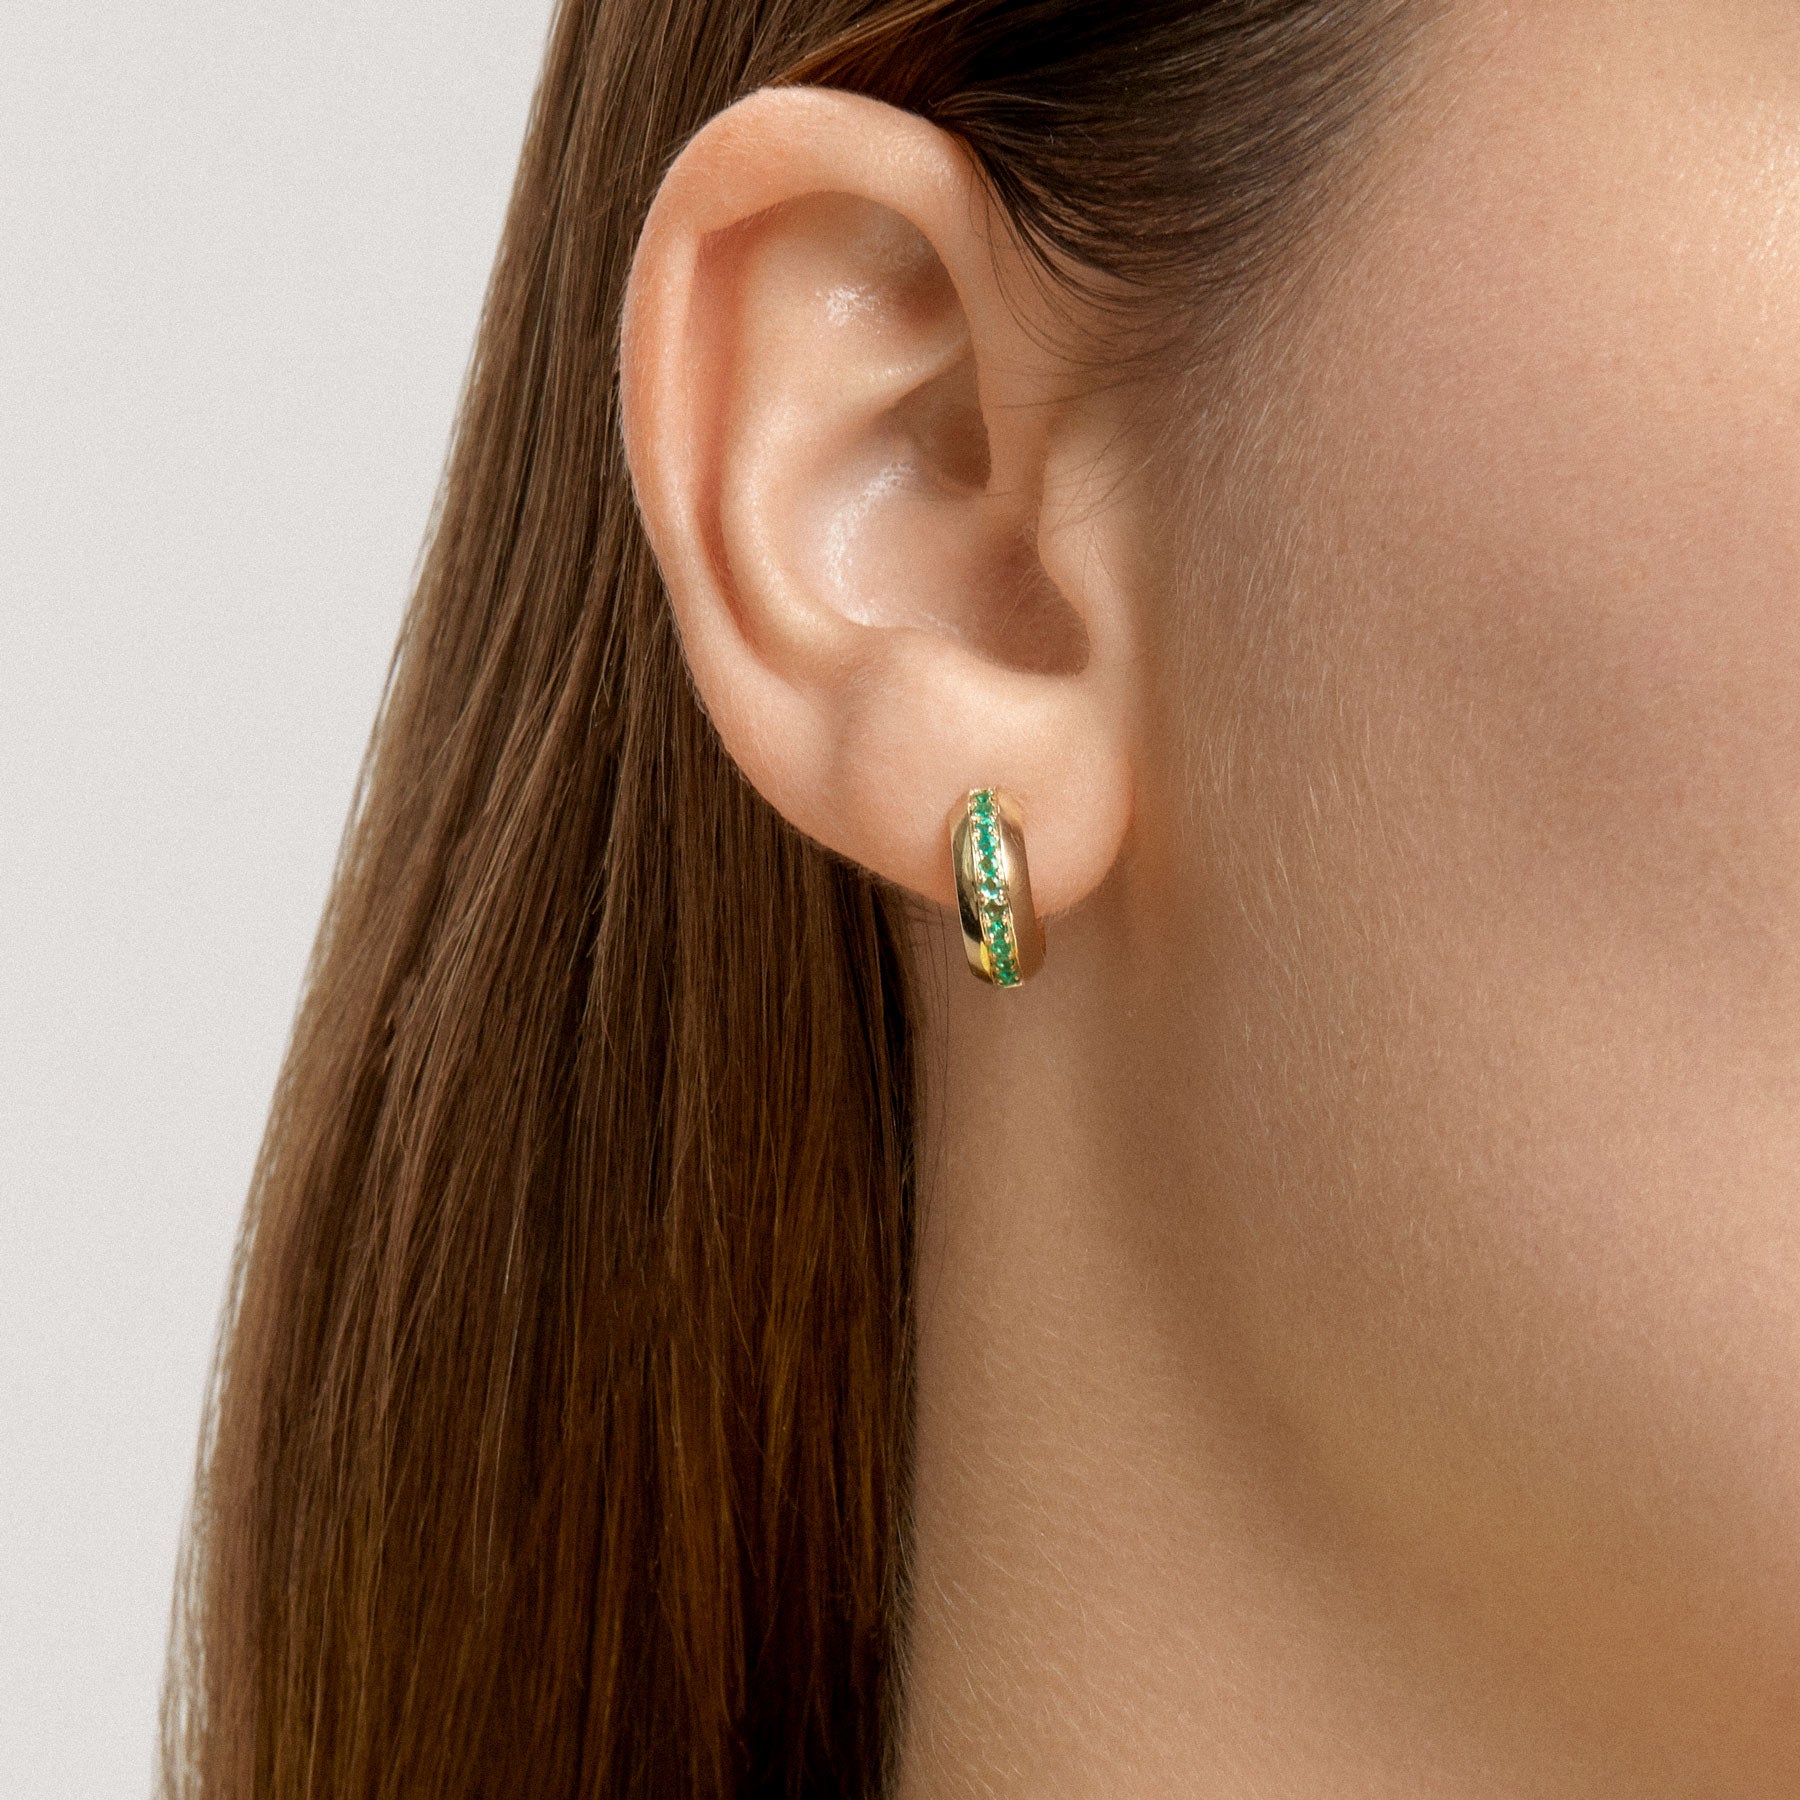 14KT Yellow Gold Emerald Huggie Earrings